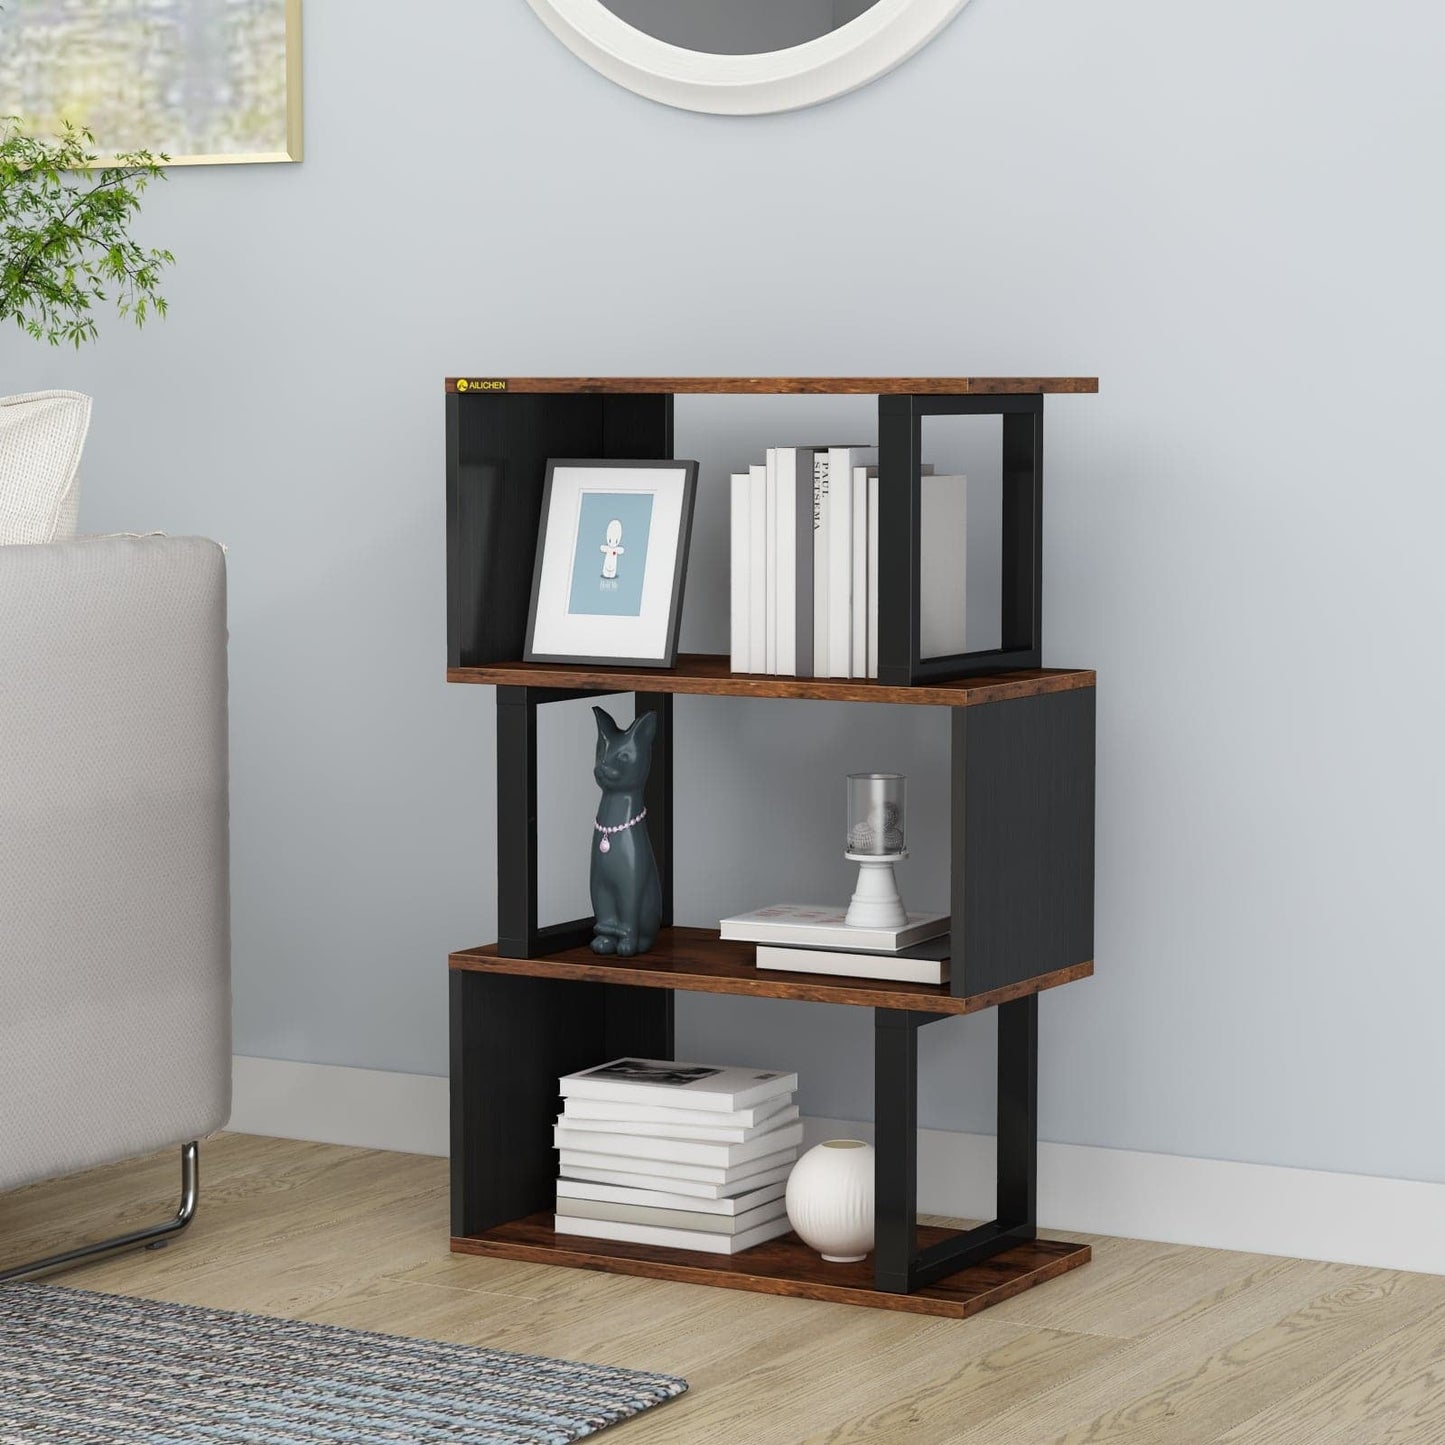 4-Tier Open Shelf Bookshelf  S-Shaped